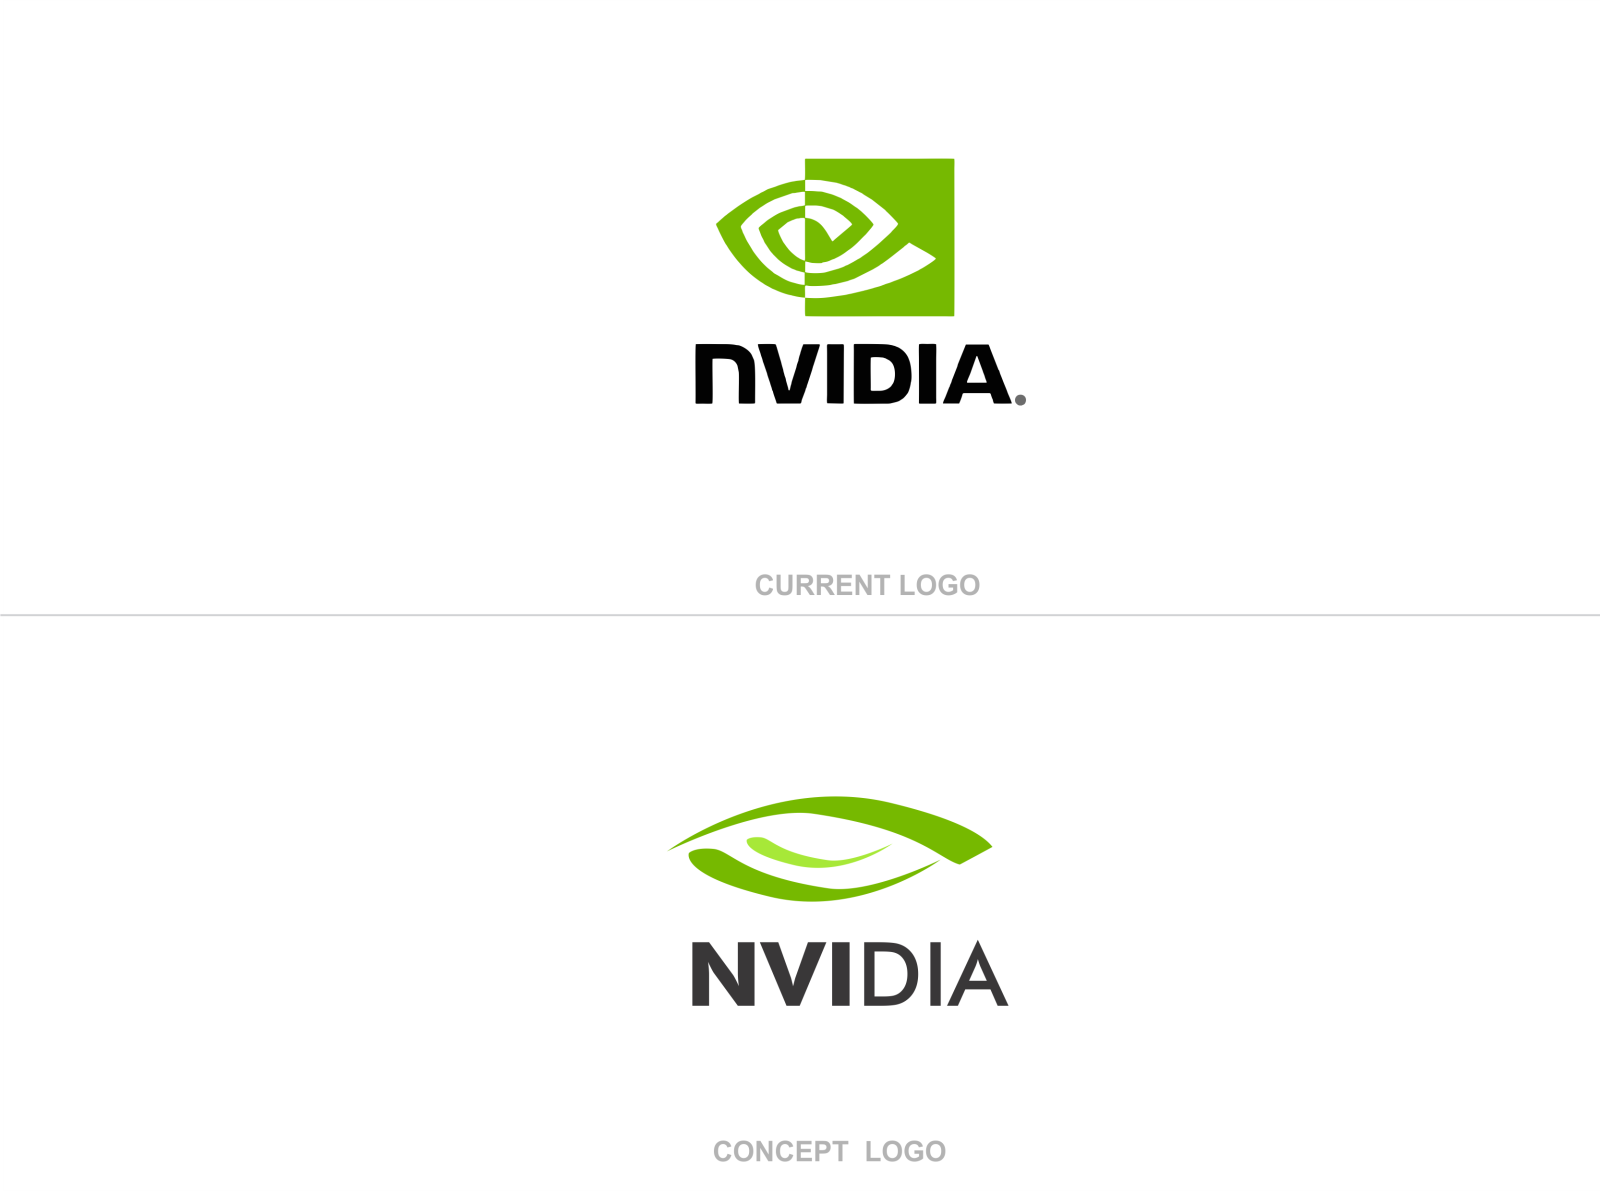 NVIDIA New logo concept by Sameer Khandare on Dribbble